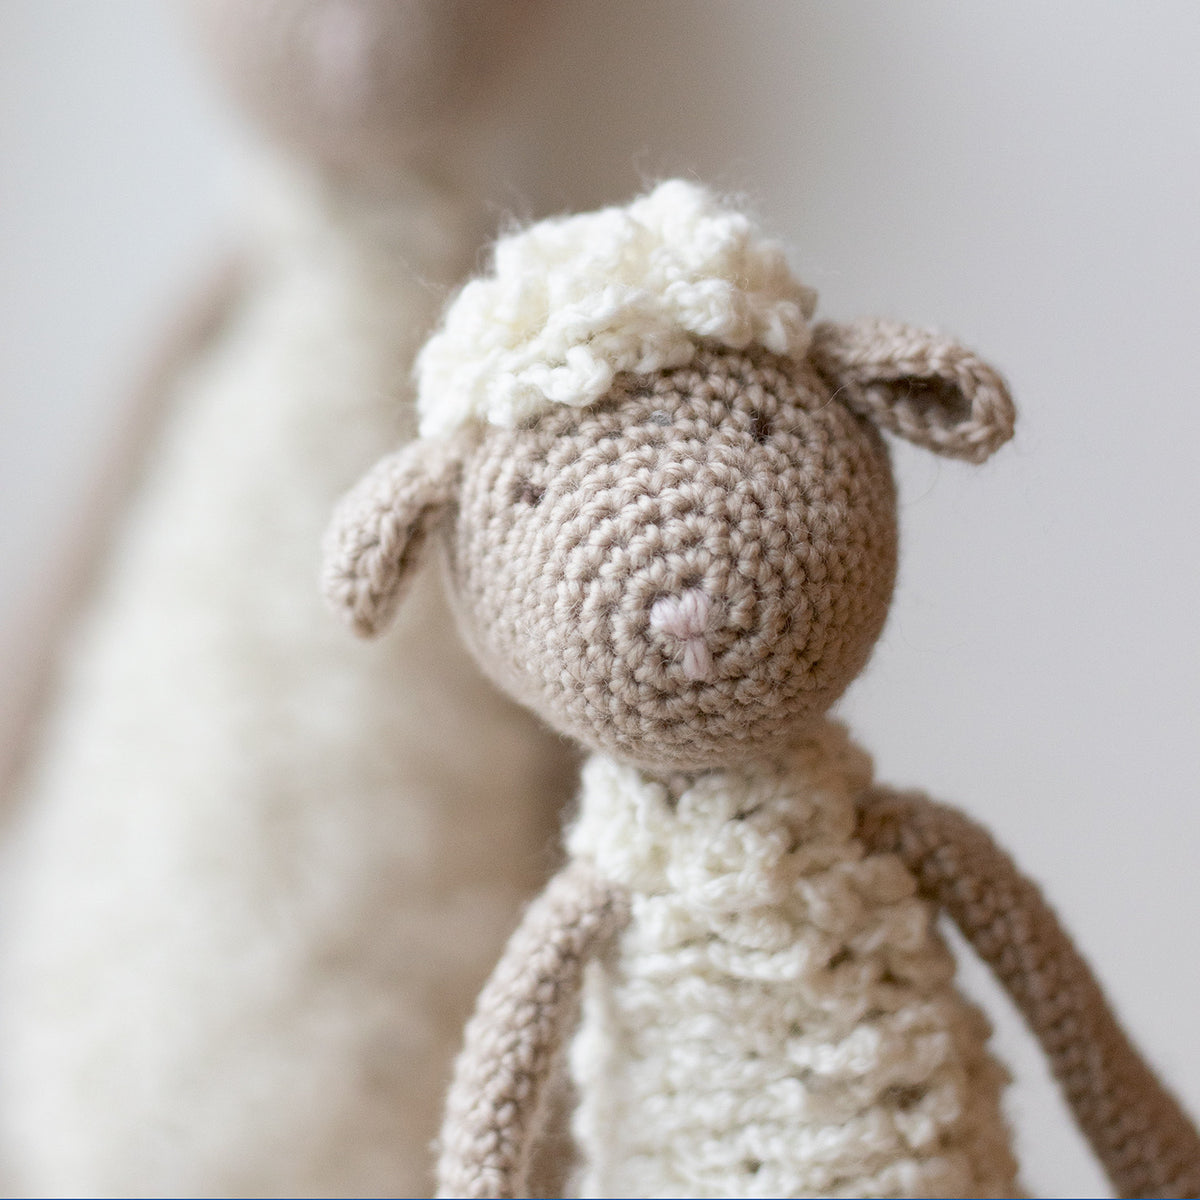 The Sheep Family, Big - Crochet kit